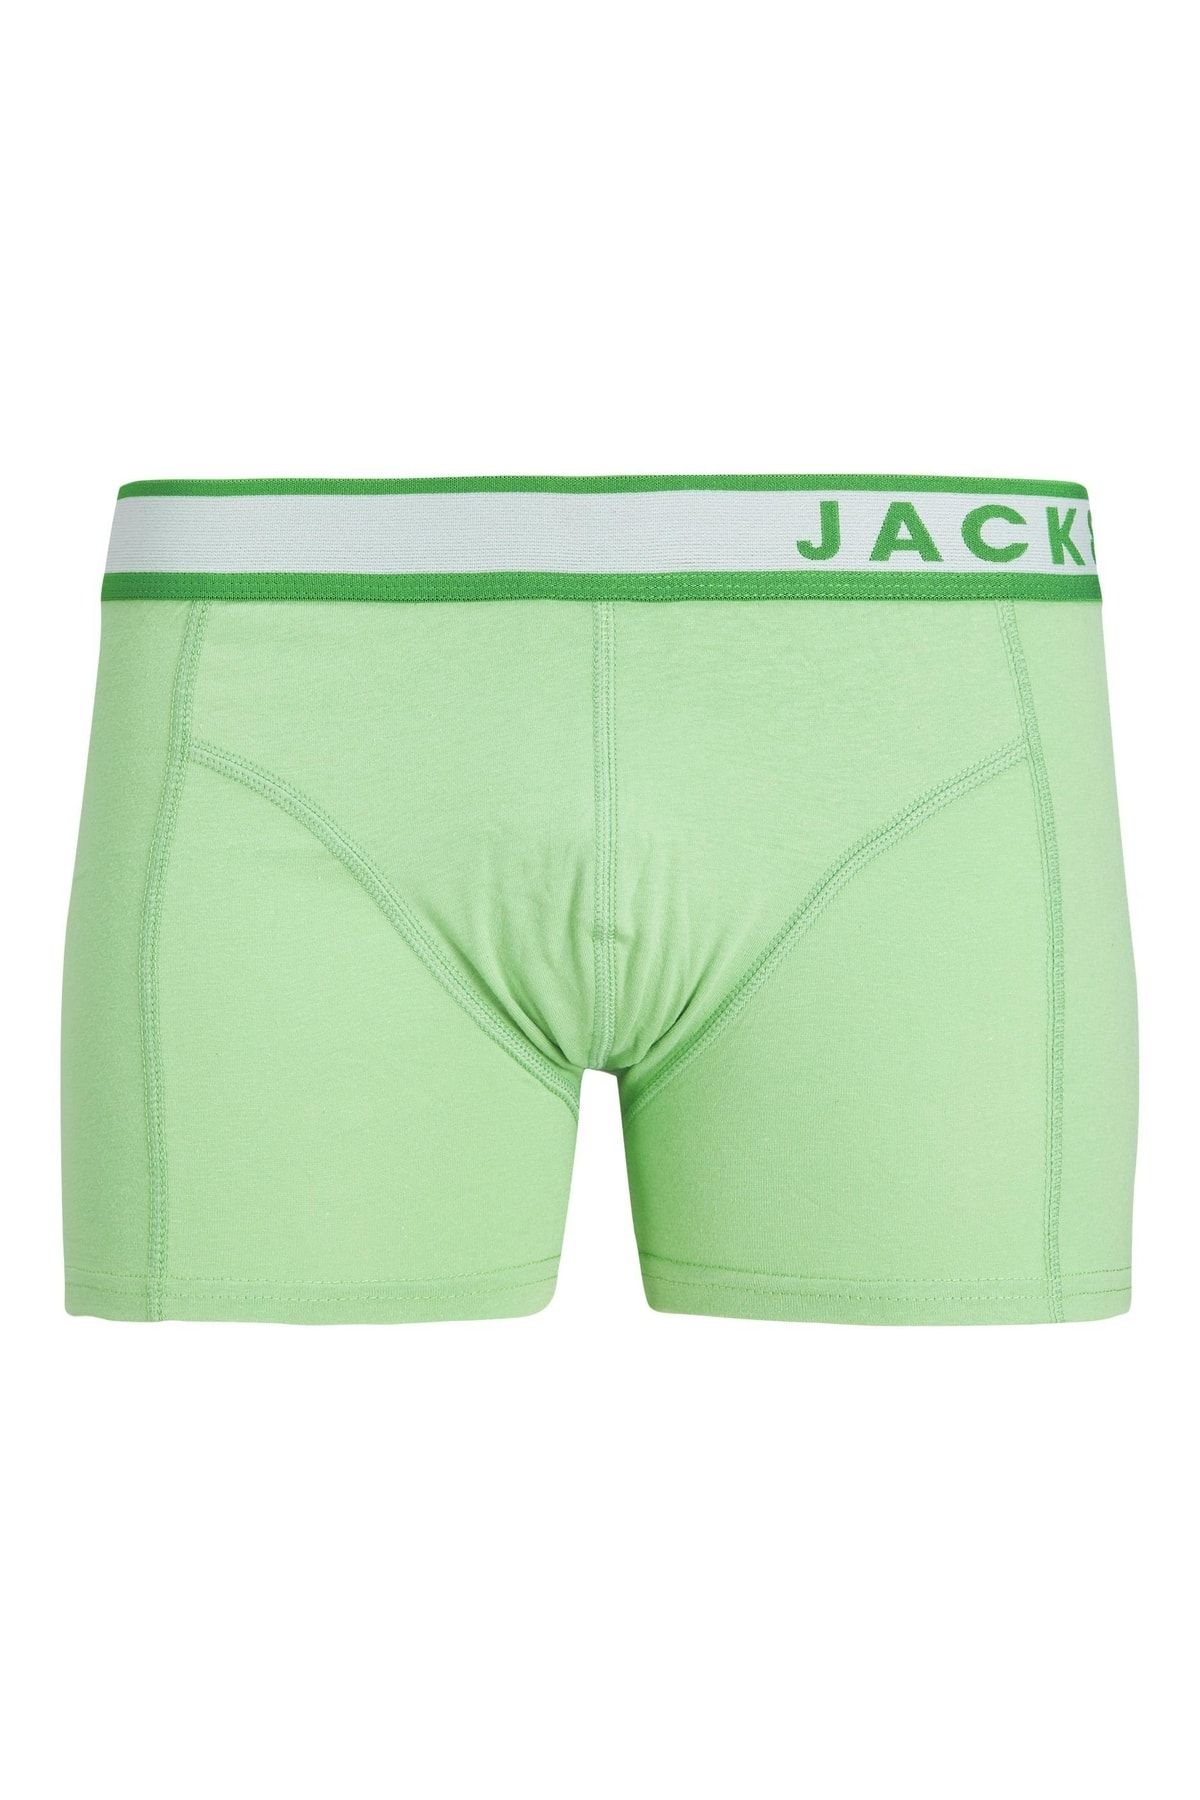 Jack & Jones Jack Jones Cleveland Trunk Erkek Yeşil Boxer 12241900-21